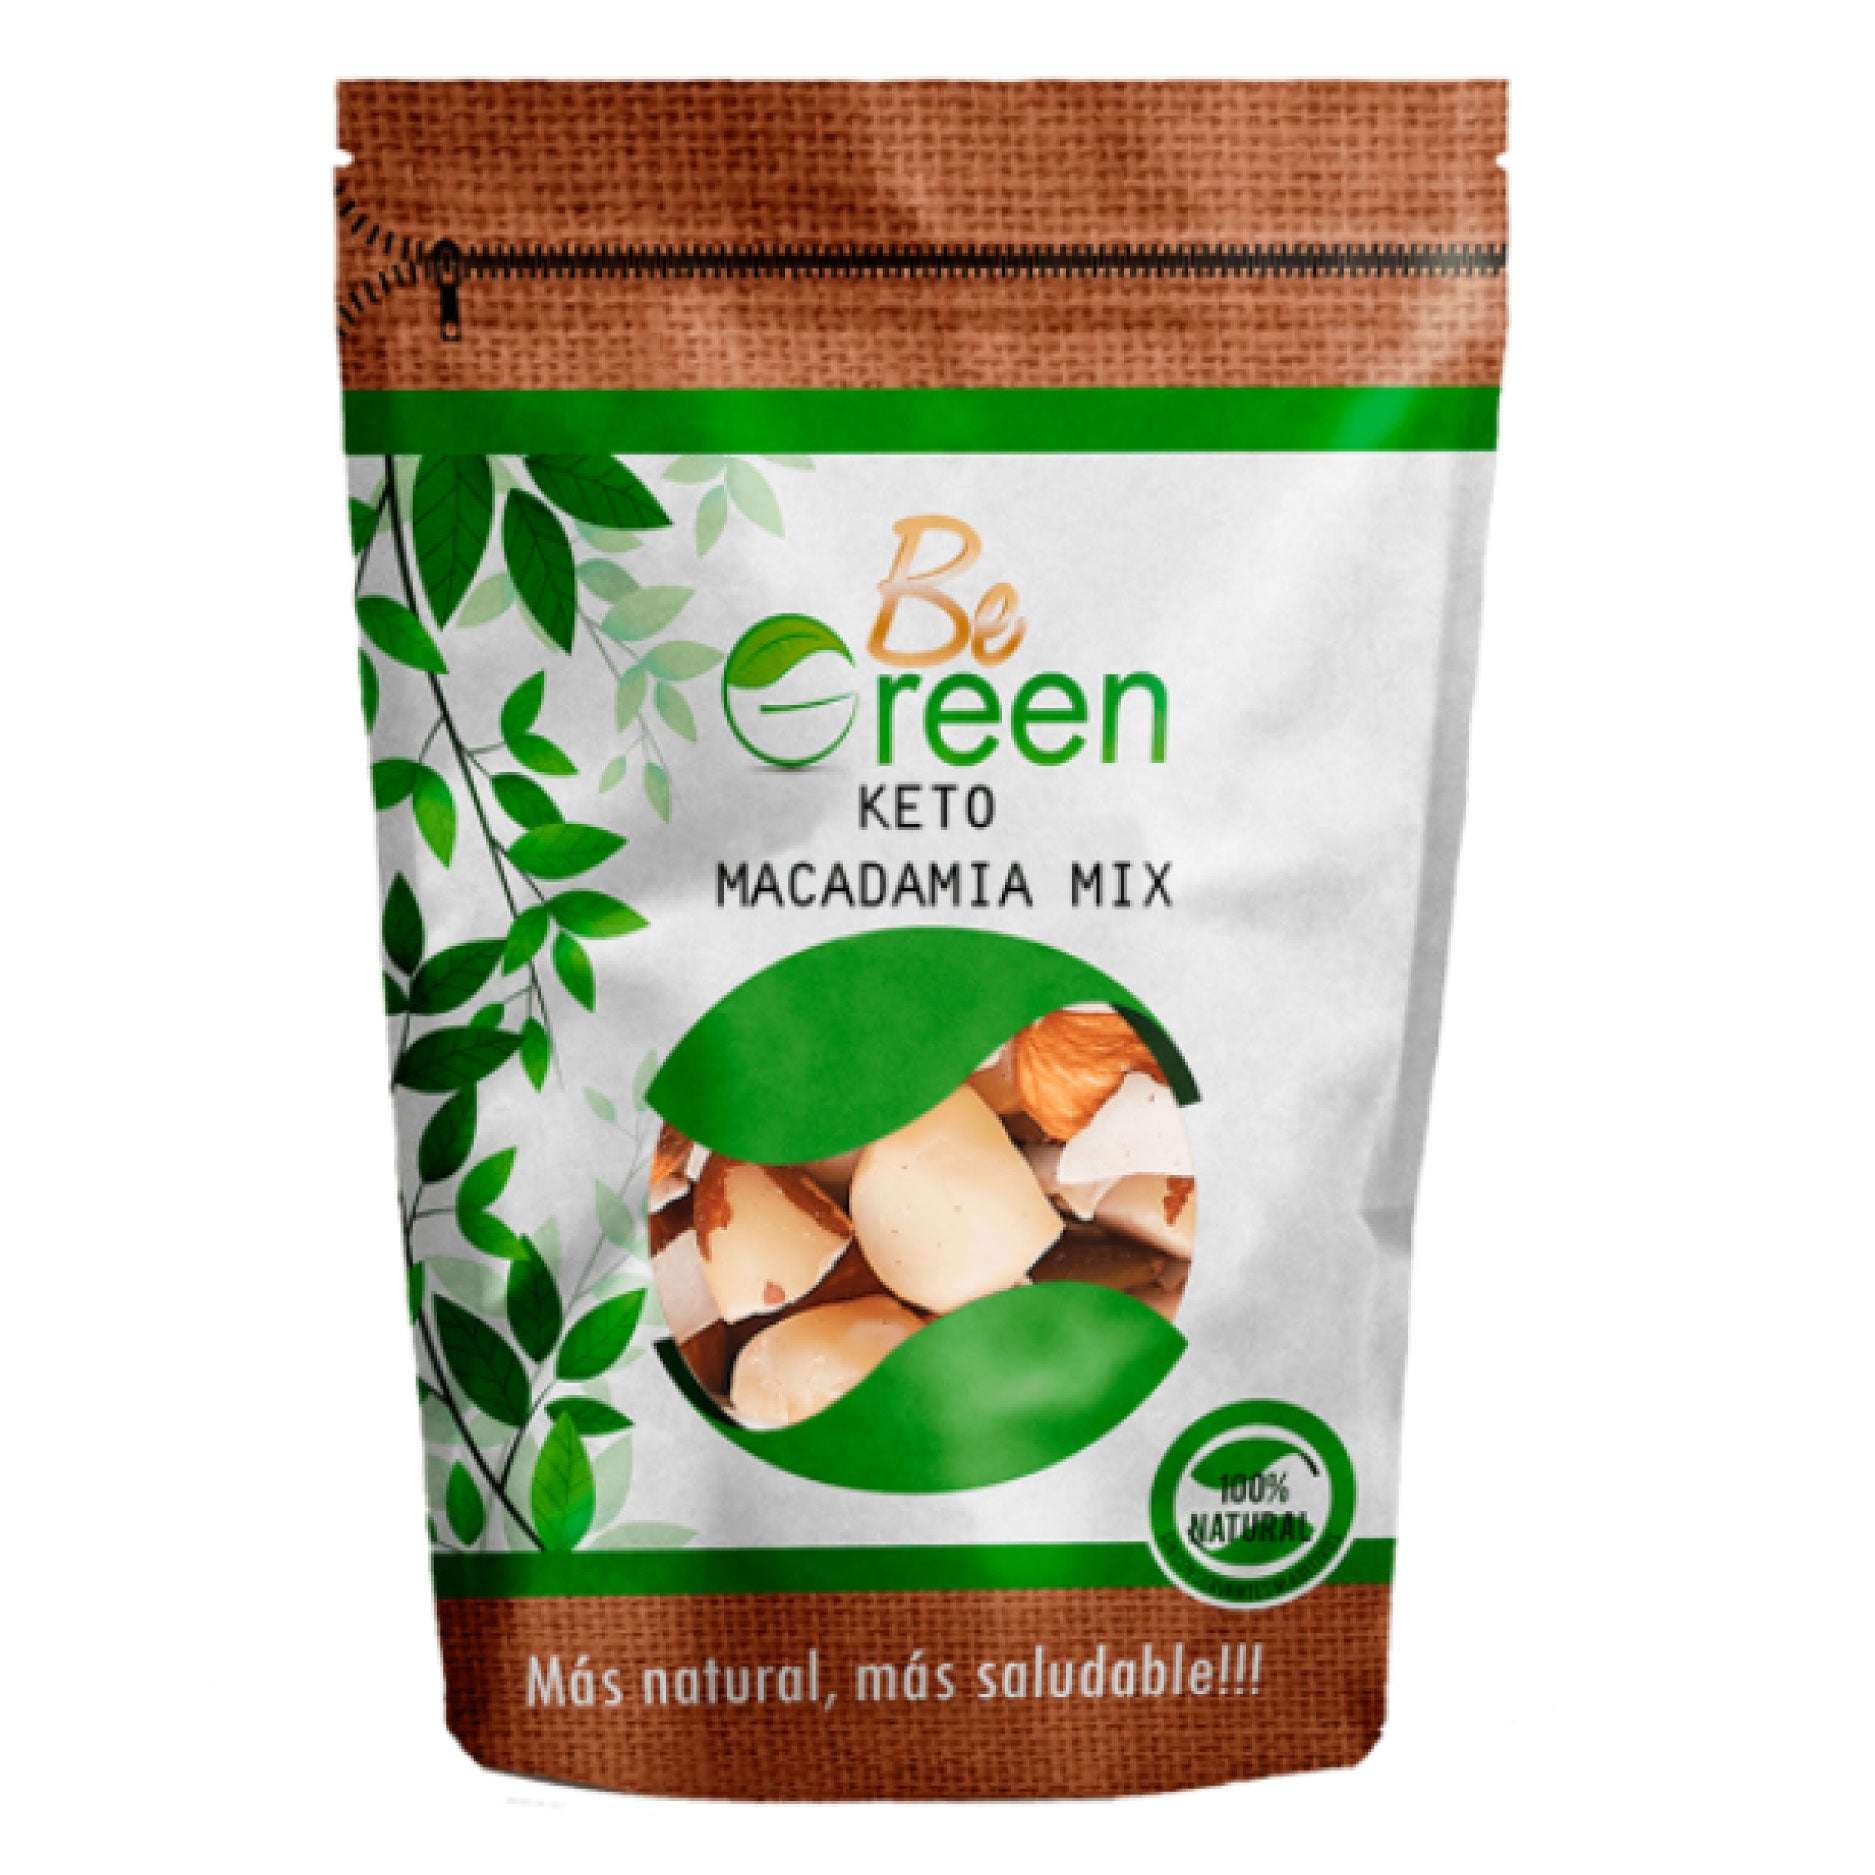 Keto Mix Macadamia (BE GREEN) 200gr